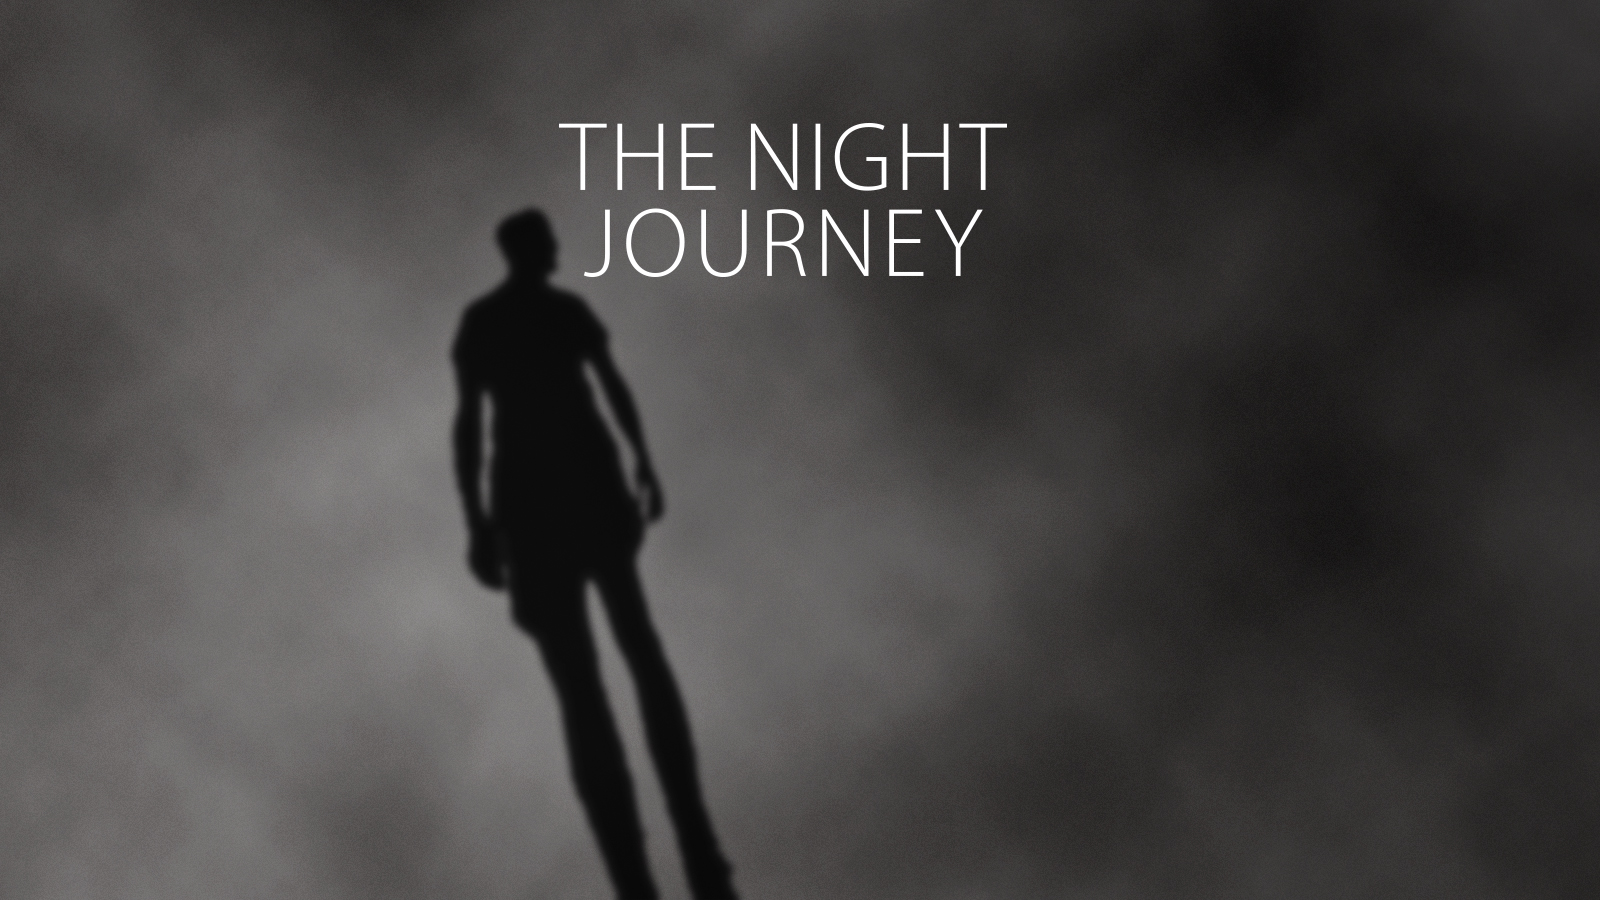 The Night Journey